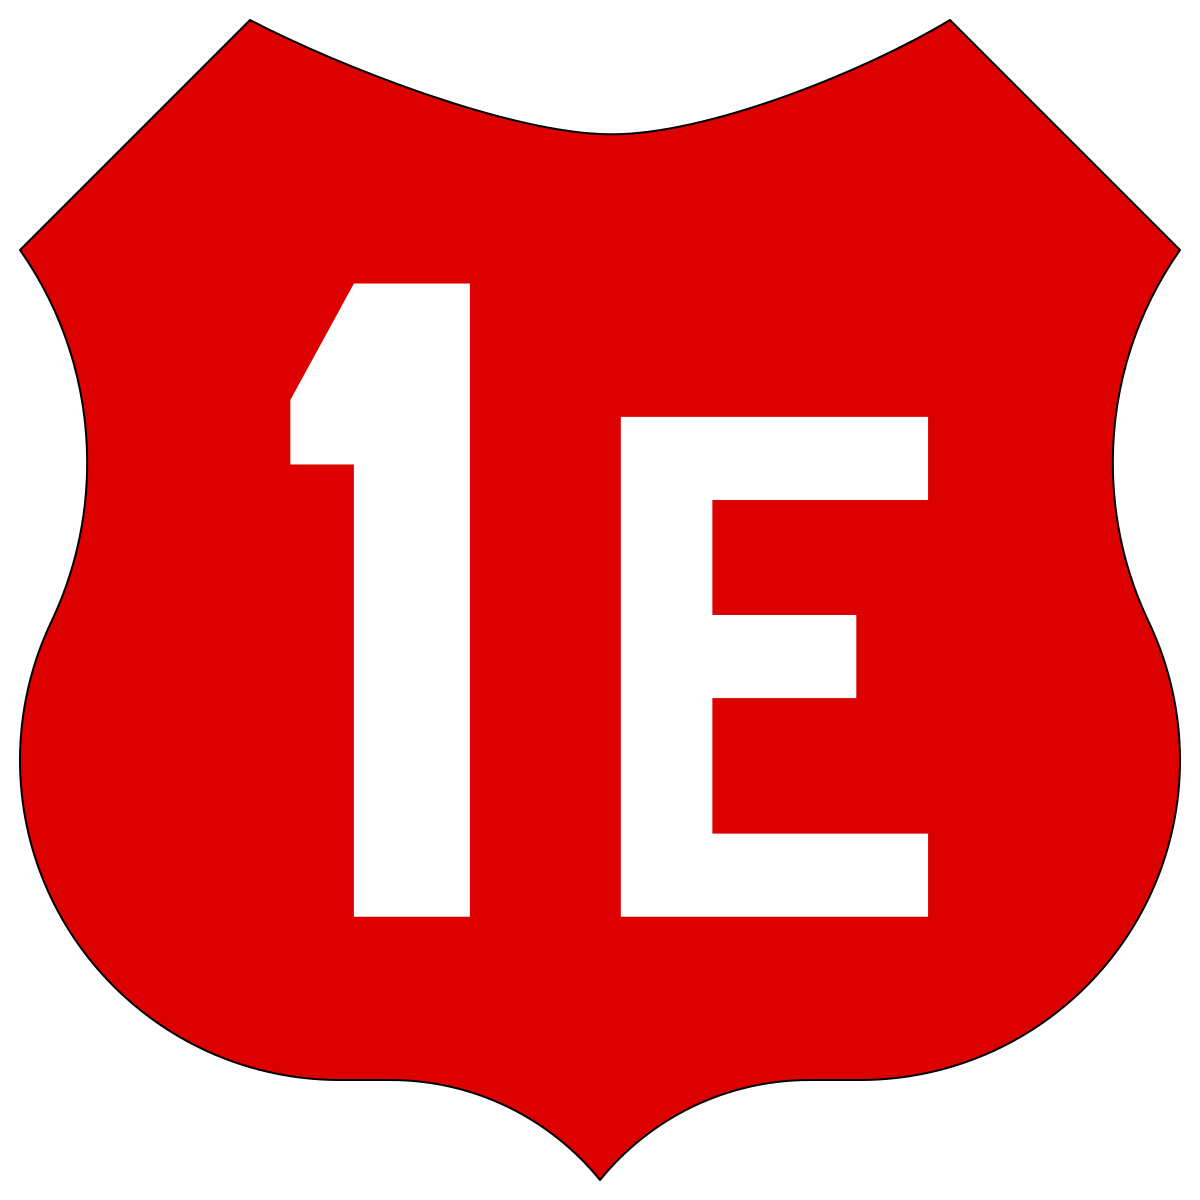 Е 1 19. Е1 логотип. 百 картинка. F.E.F футболка эмблема. 3 Г картинка.